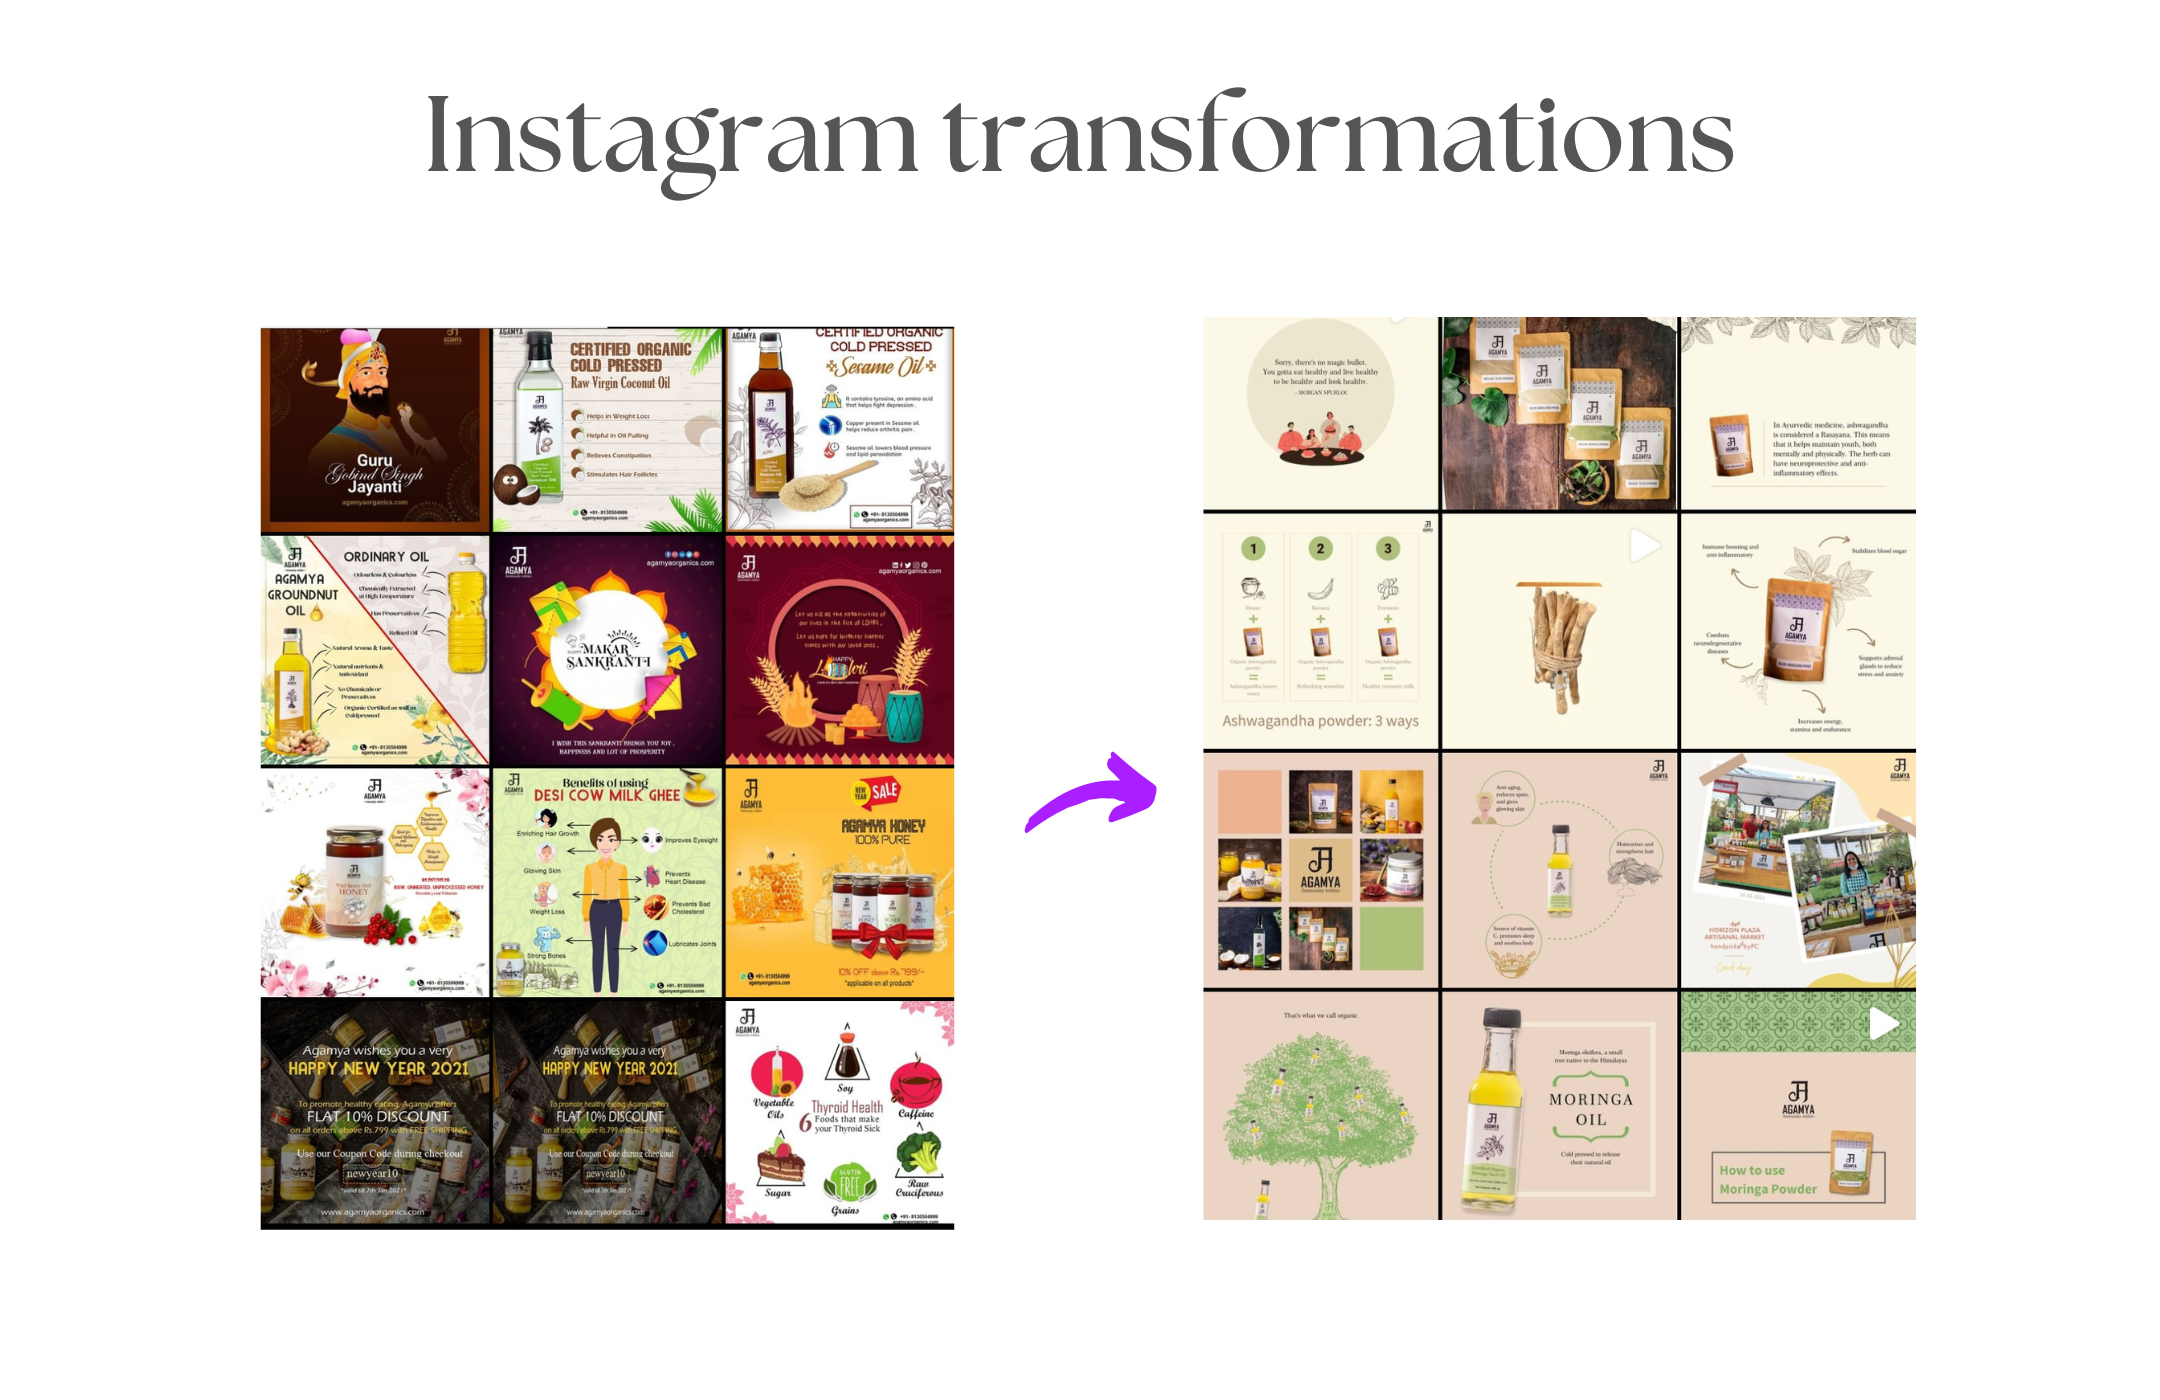 Instagram transformations